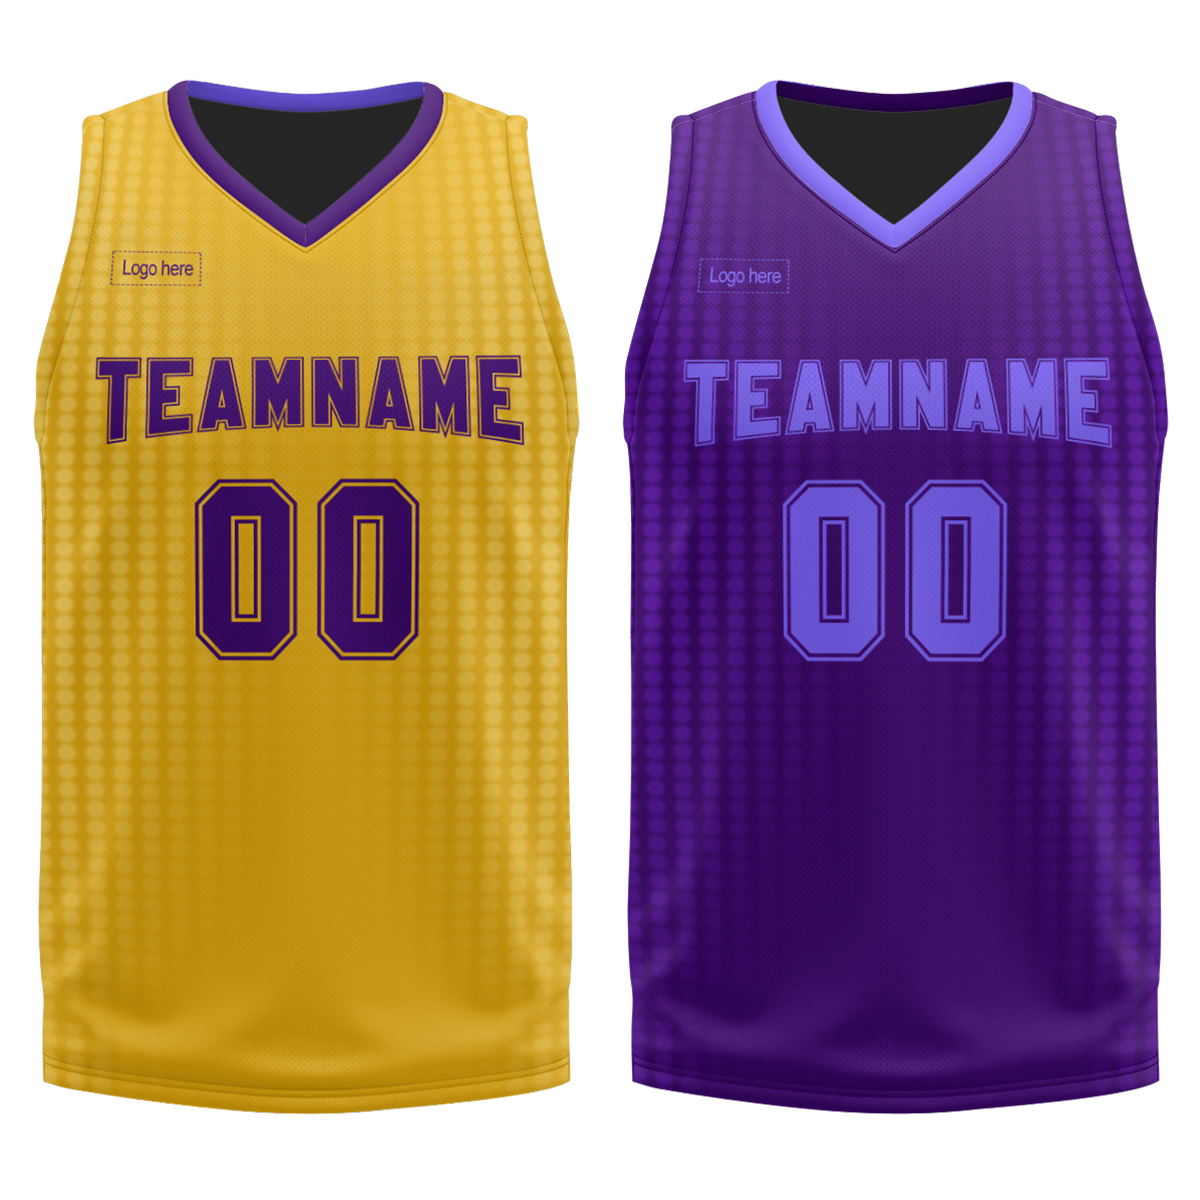 oem-service-custom-cool-design-new-style-basketball-jerseys-quick-dry-basketball-uniforms-at-cj-pod-4